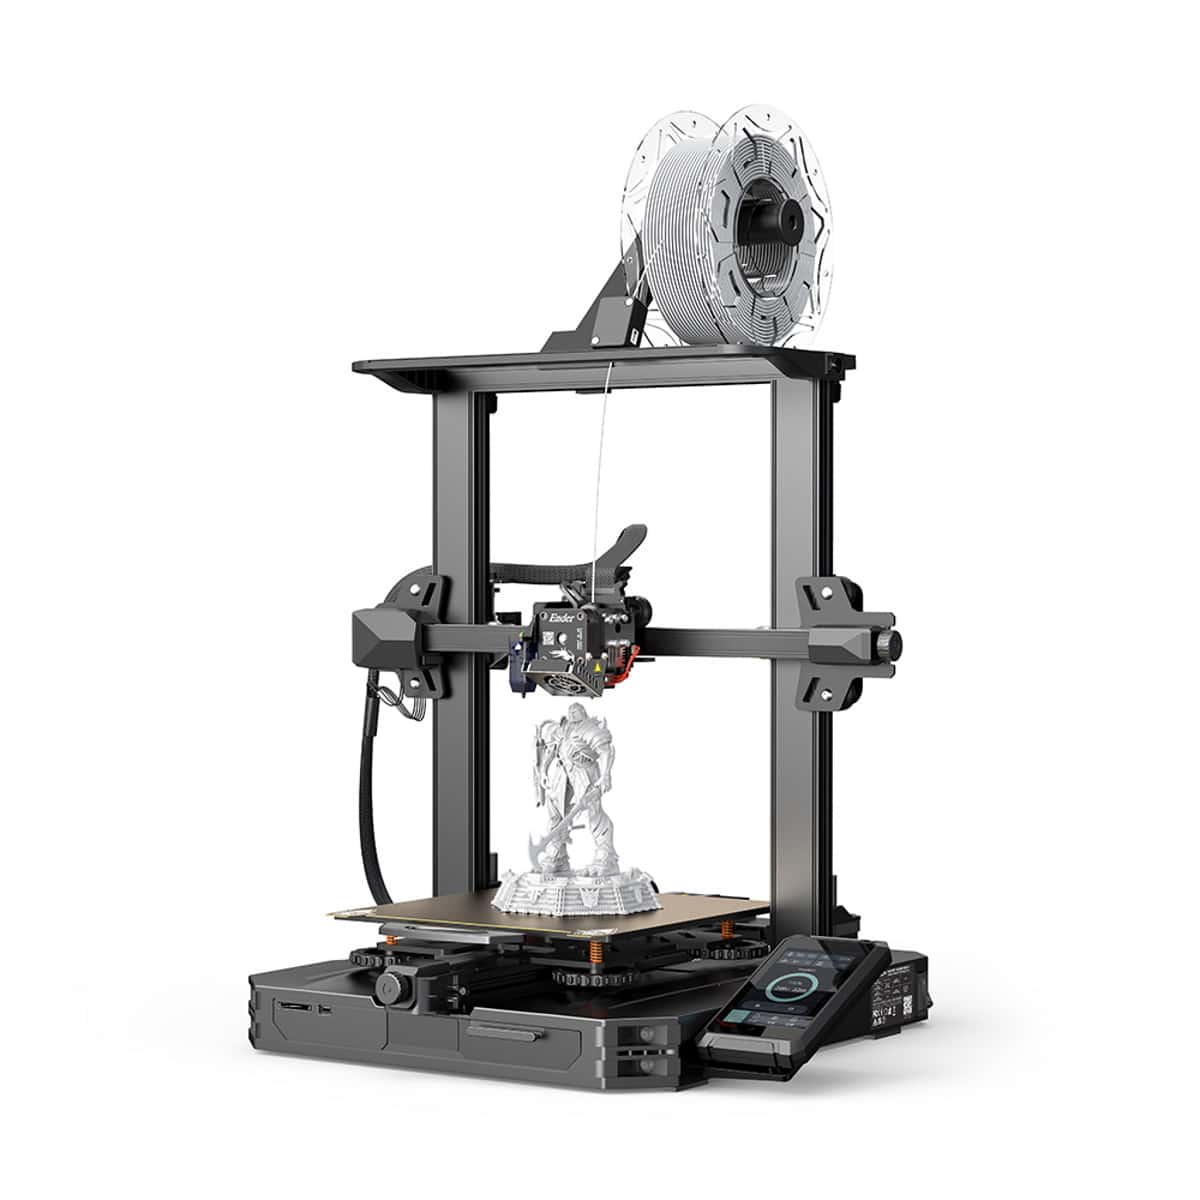 Køb Creality Ender 3 S1 Pro 3d printer - Pris 2999.00 kr.